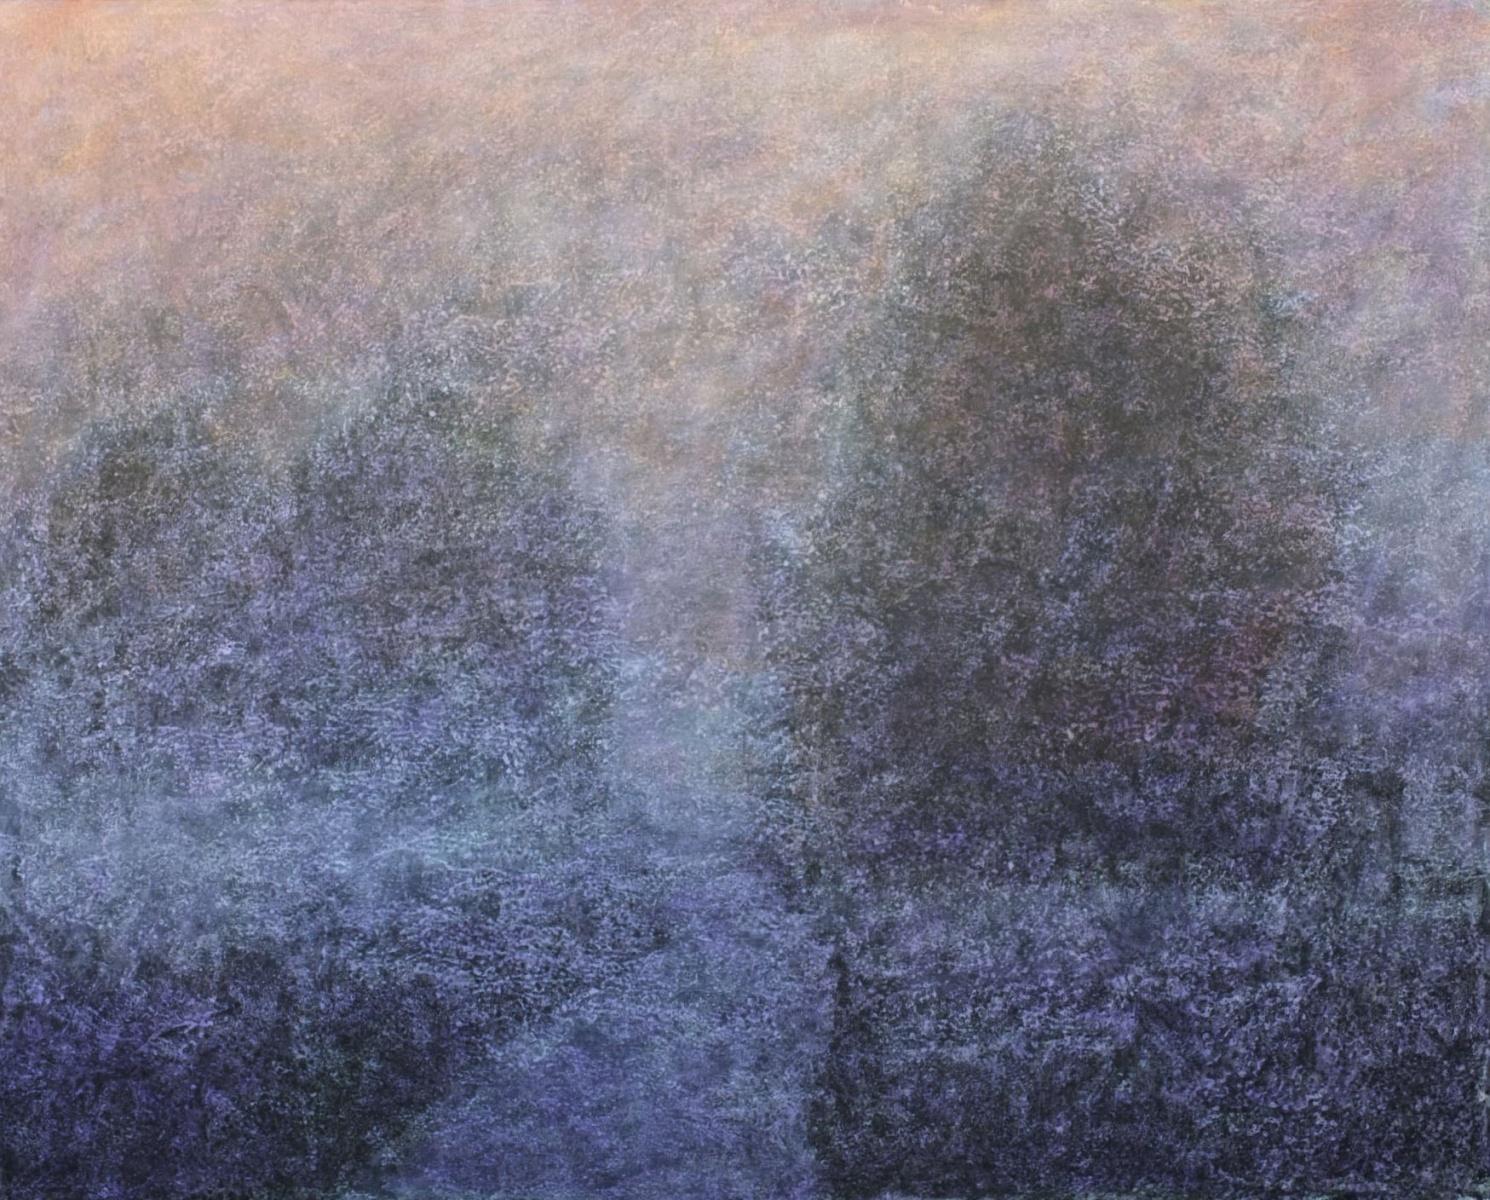 Melting of horizon - Acrylmalerei, Landschafts- und abstraktes Gemälde, Lila